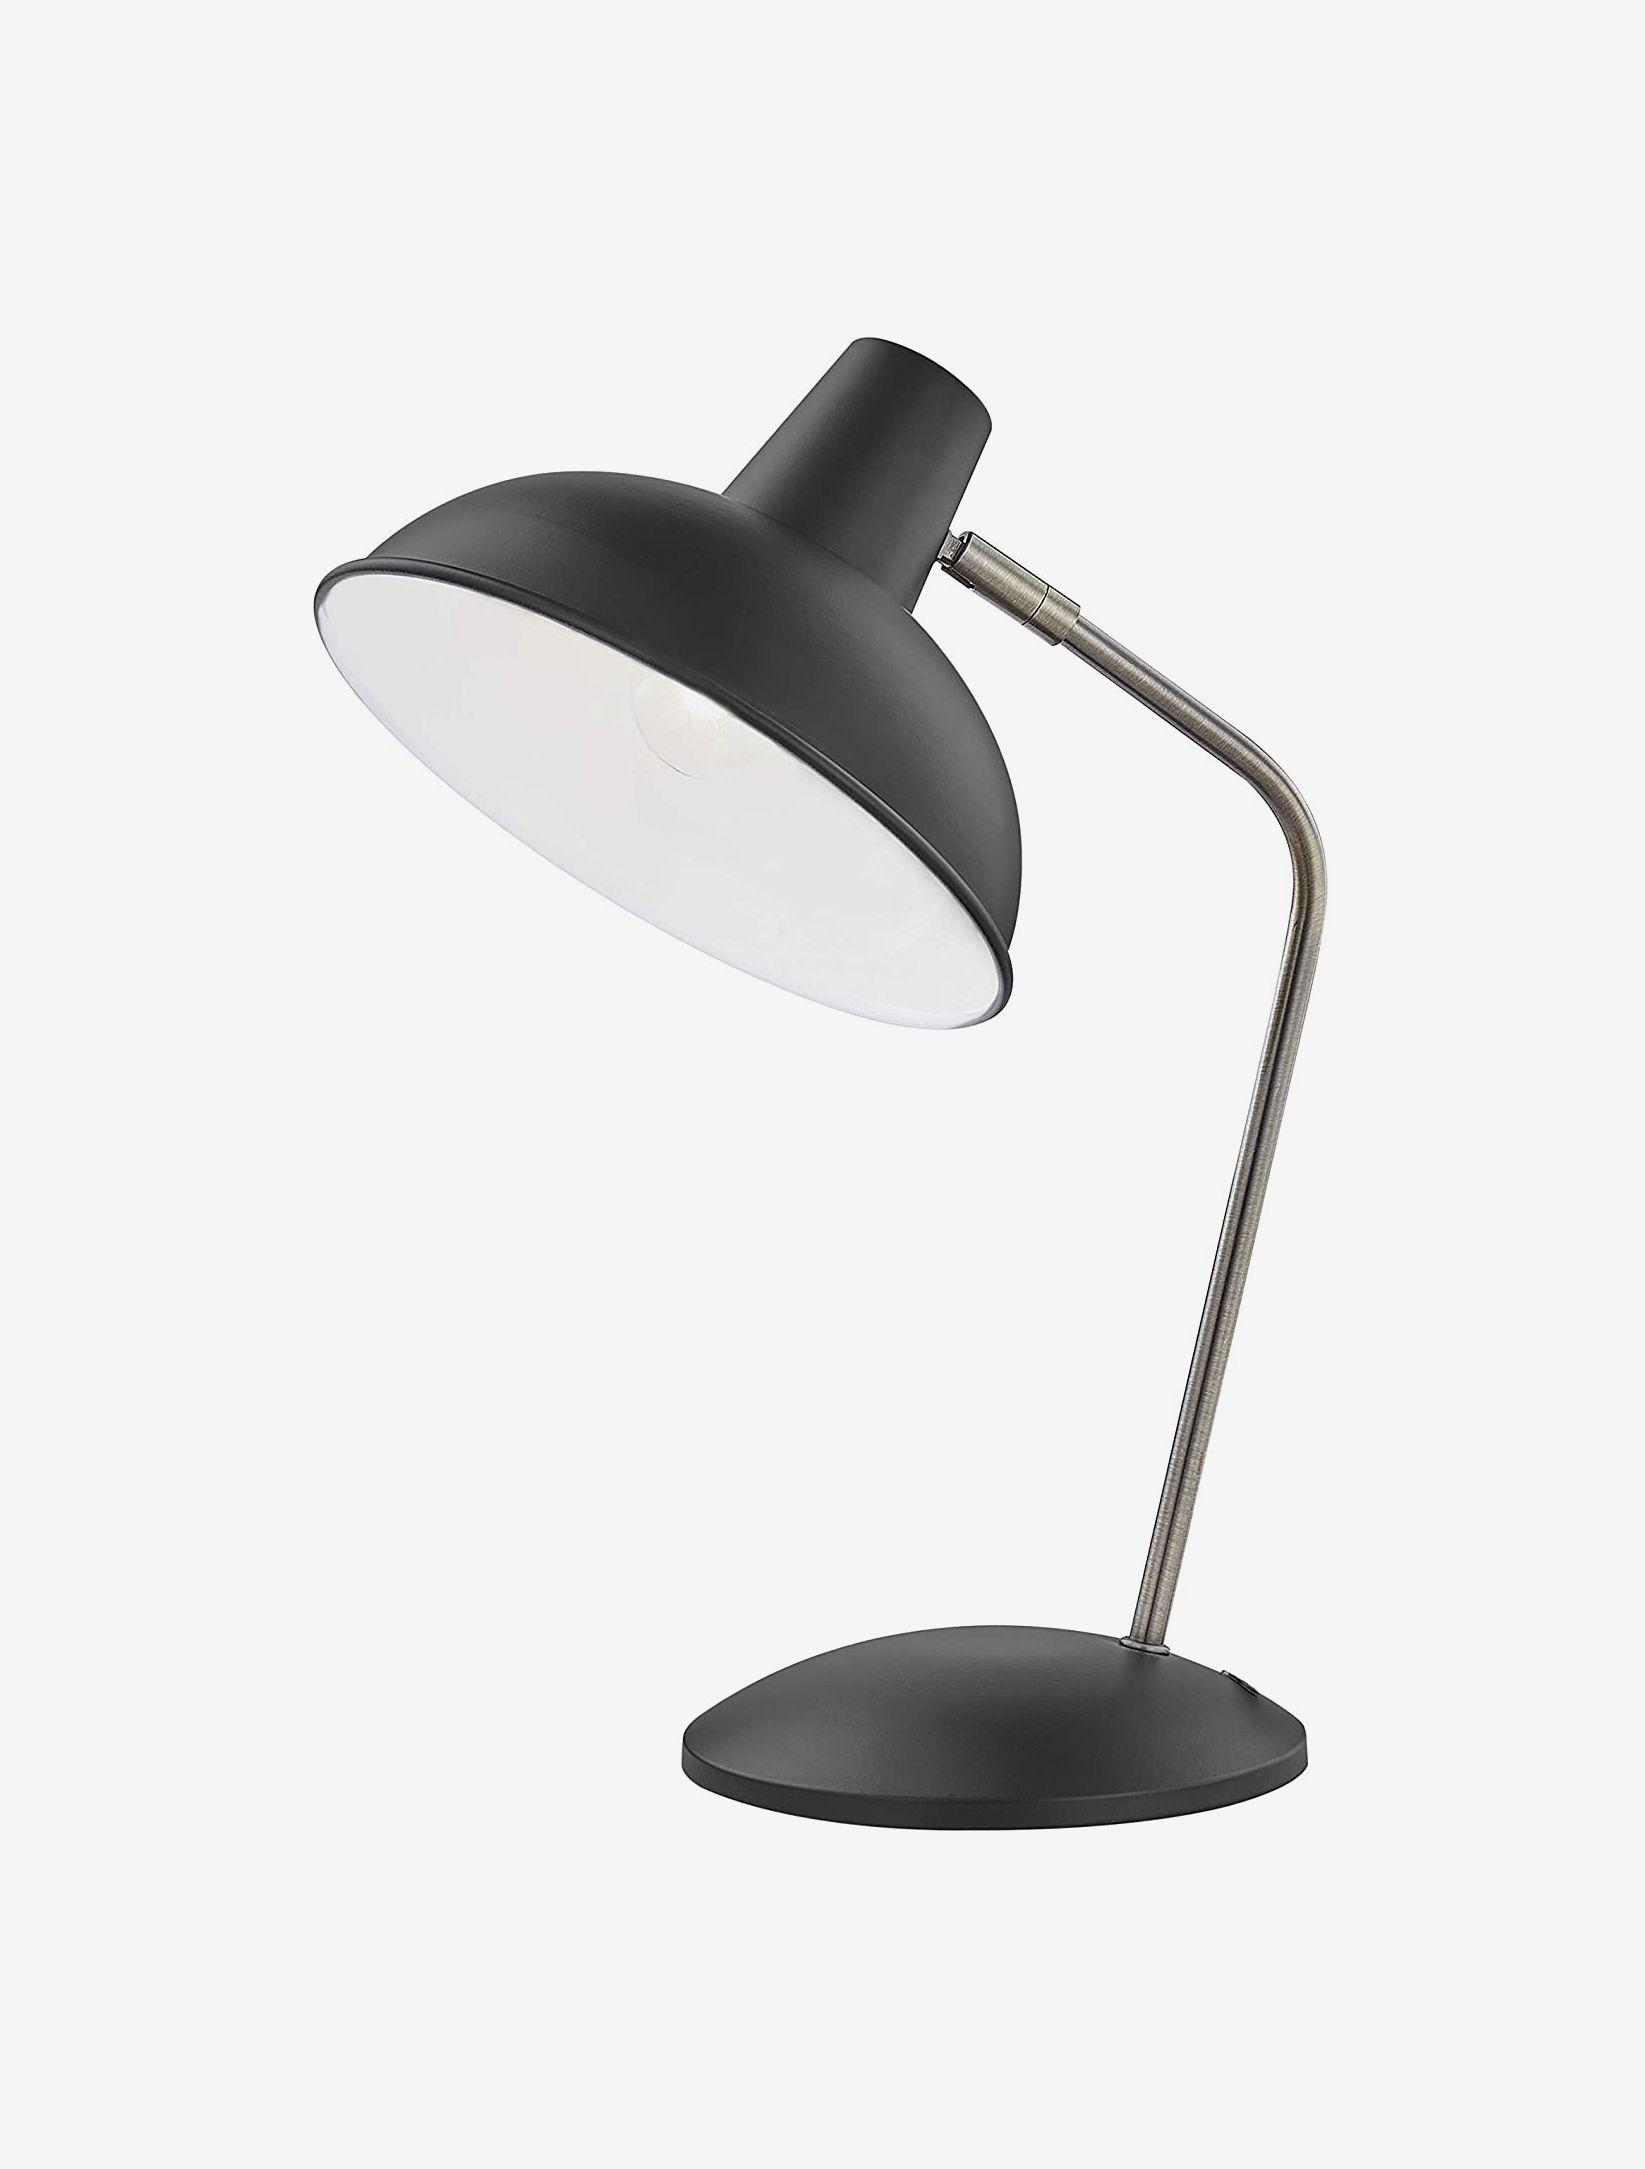 29 Best Desk Lamps 2021 The Strategist, What Makes A Good Desk Lamp